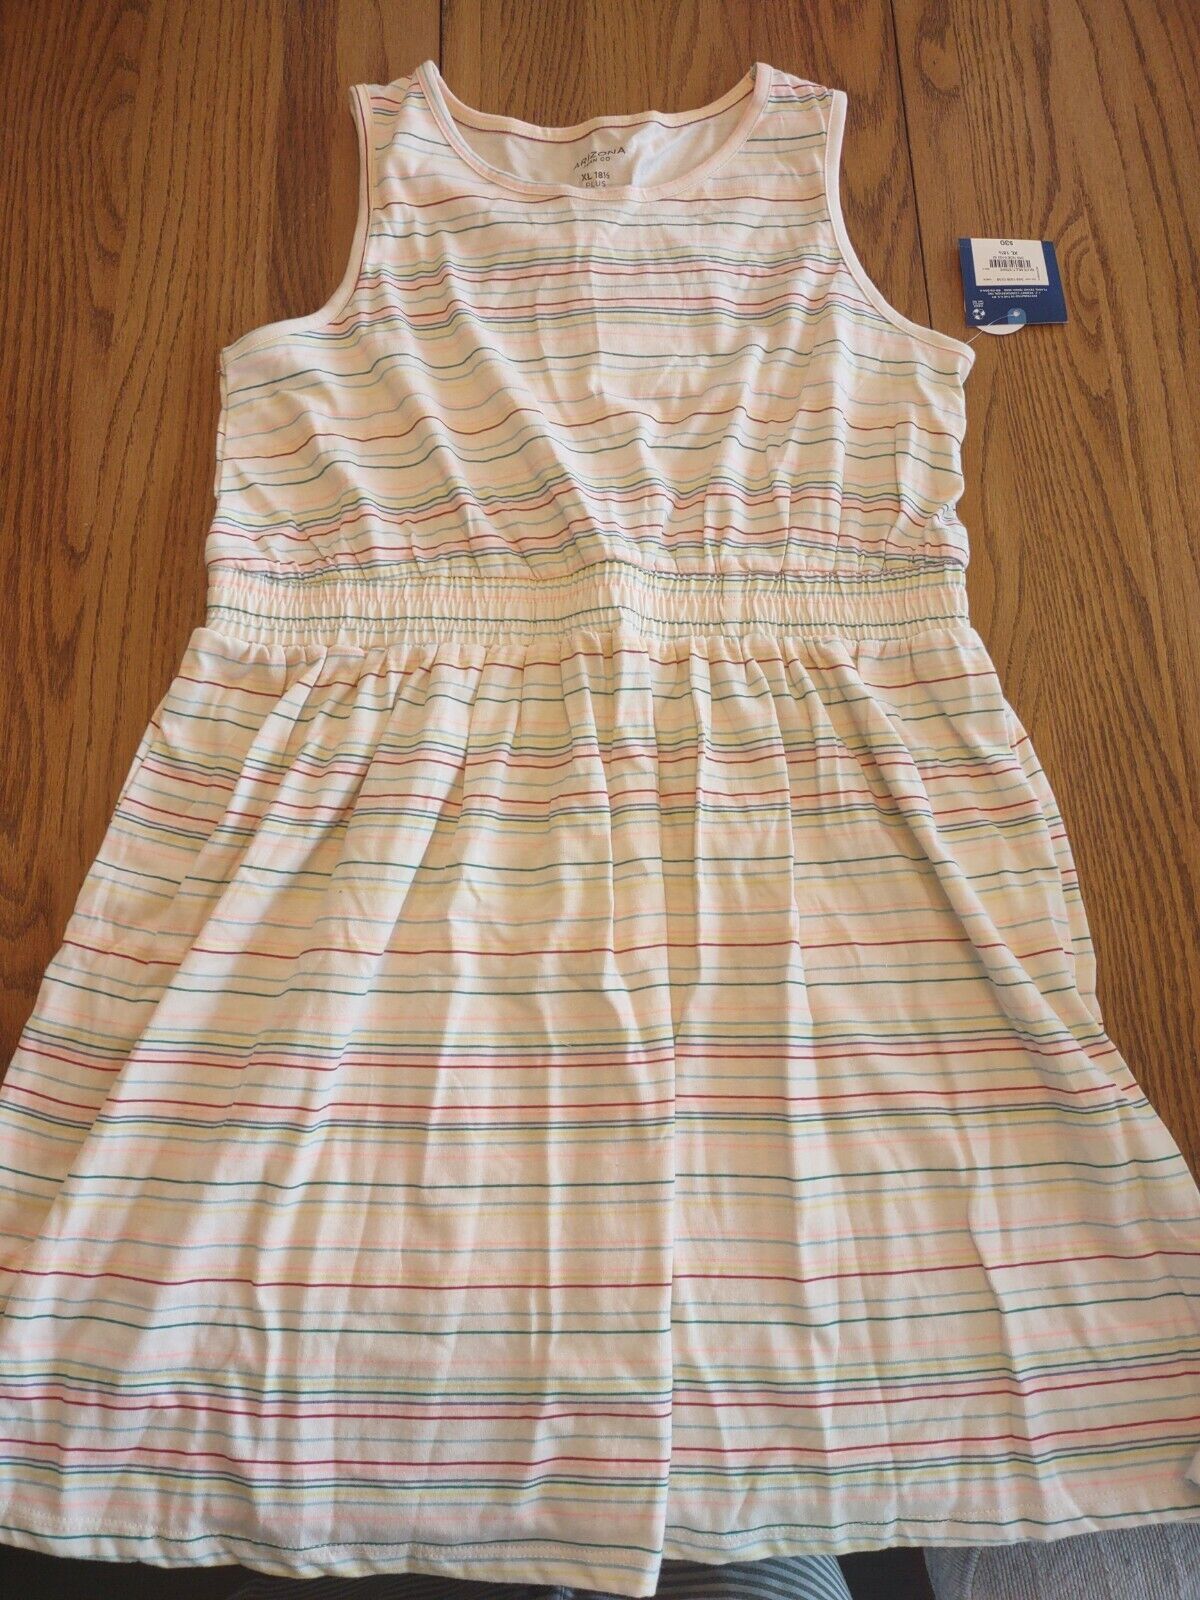 Arizona Girls XL 18 1/2 Plus Striped Dress-Brand New-SHIPS N 24 HOURS - $29.70